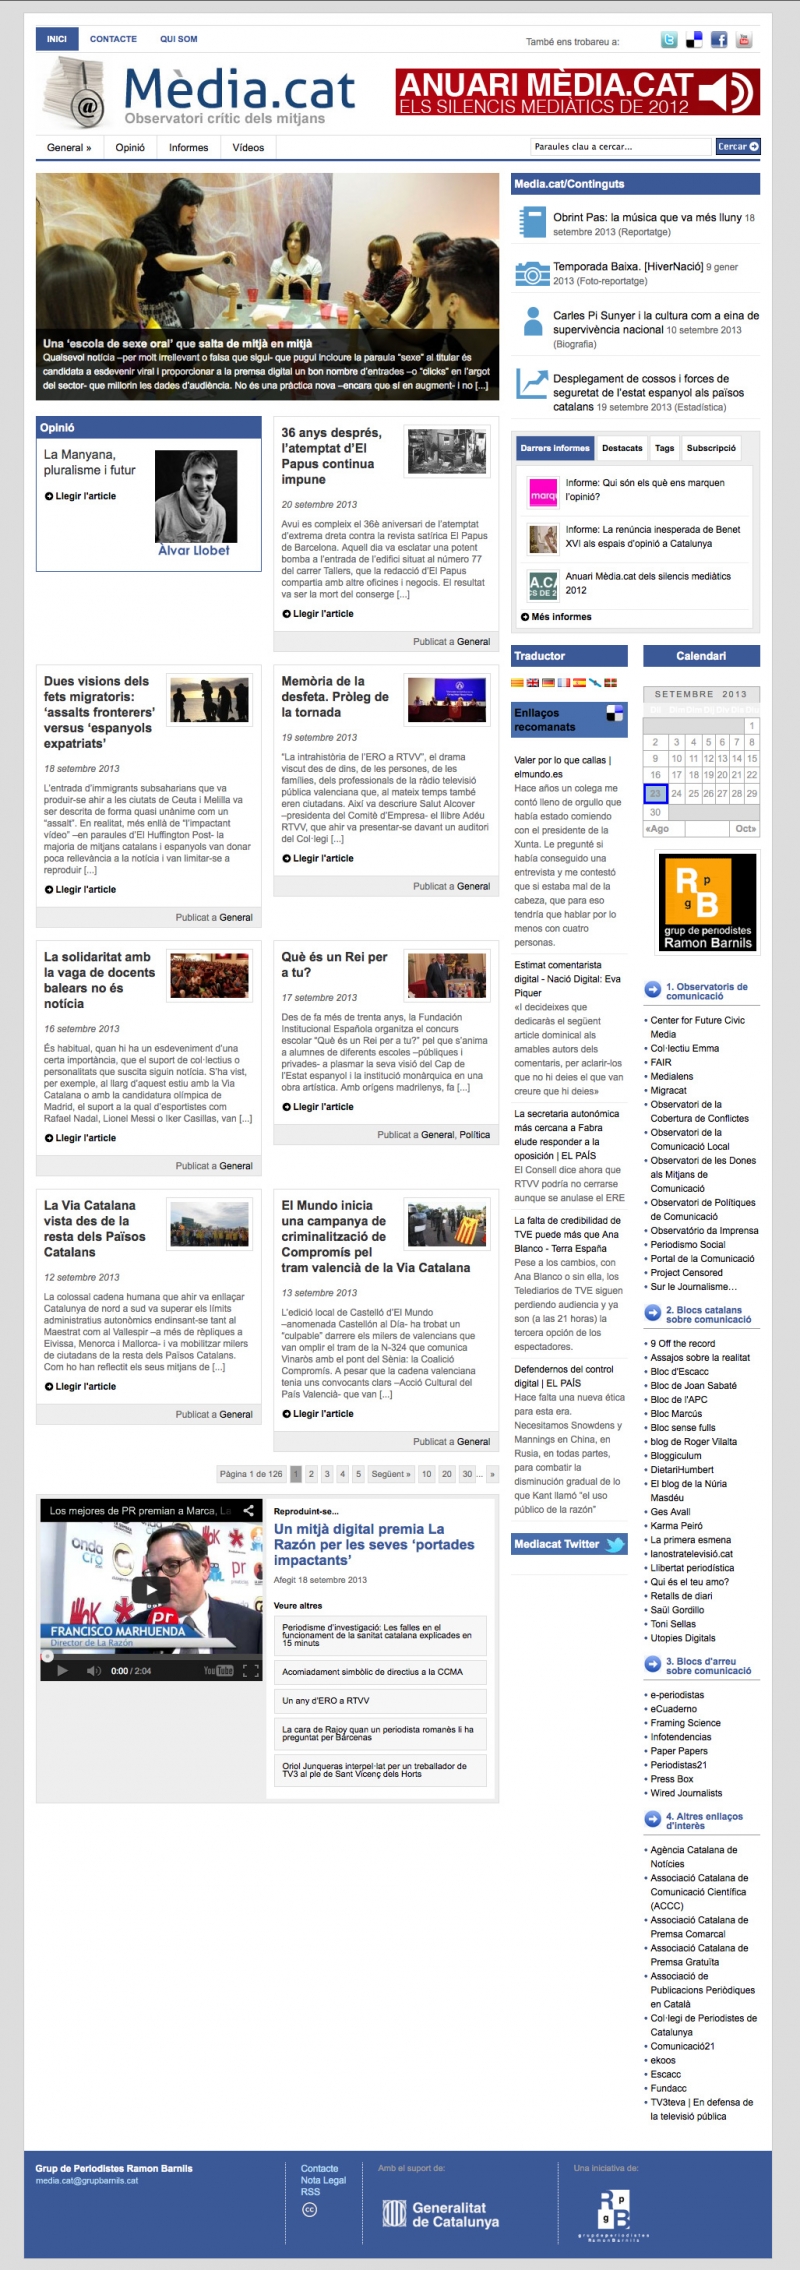 Mèdia.cat homepage